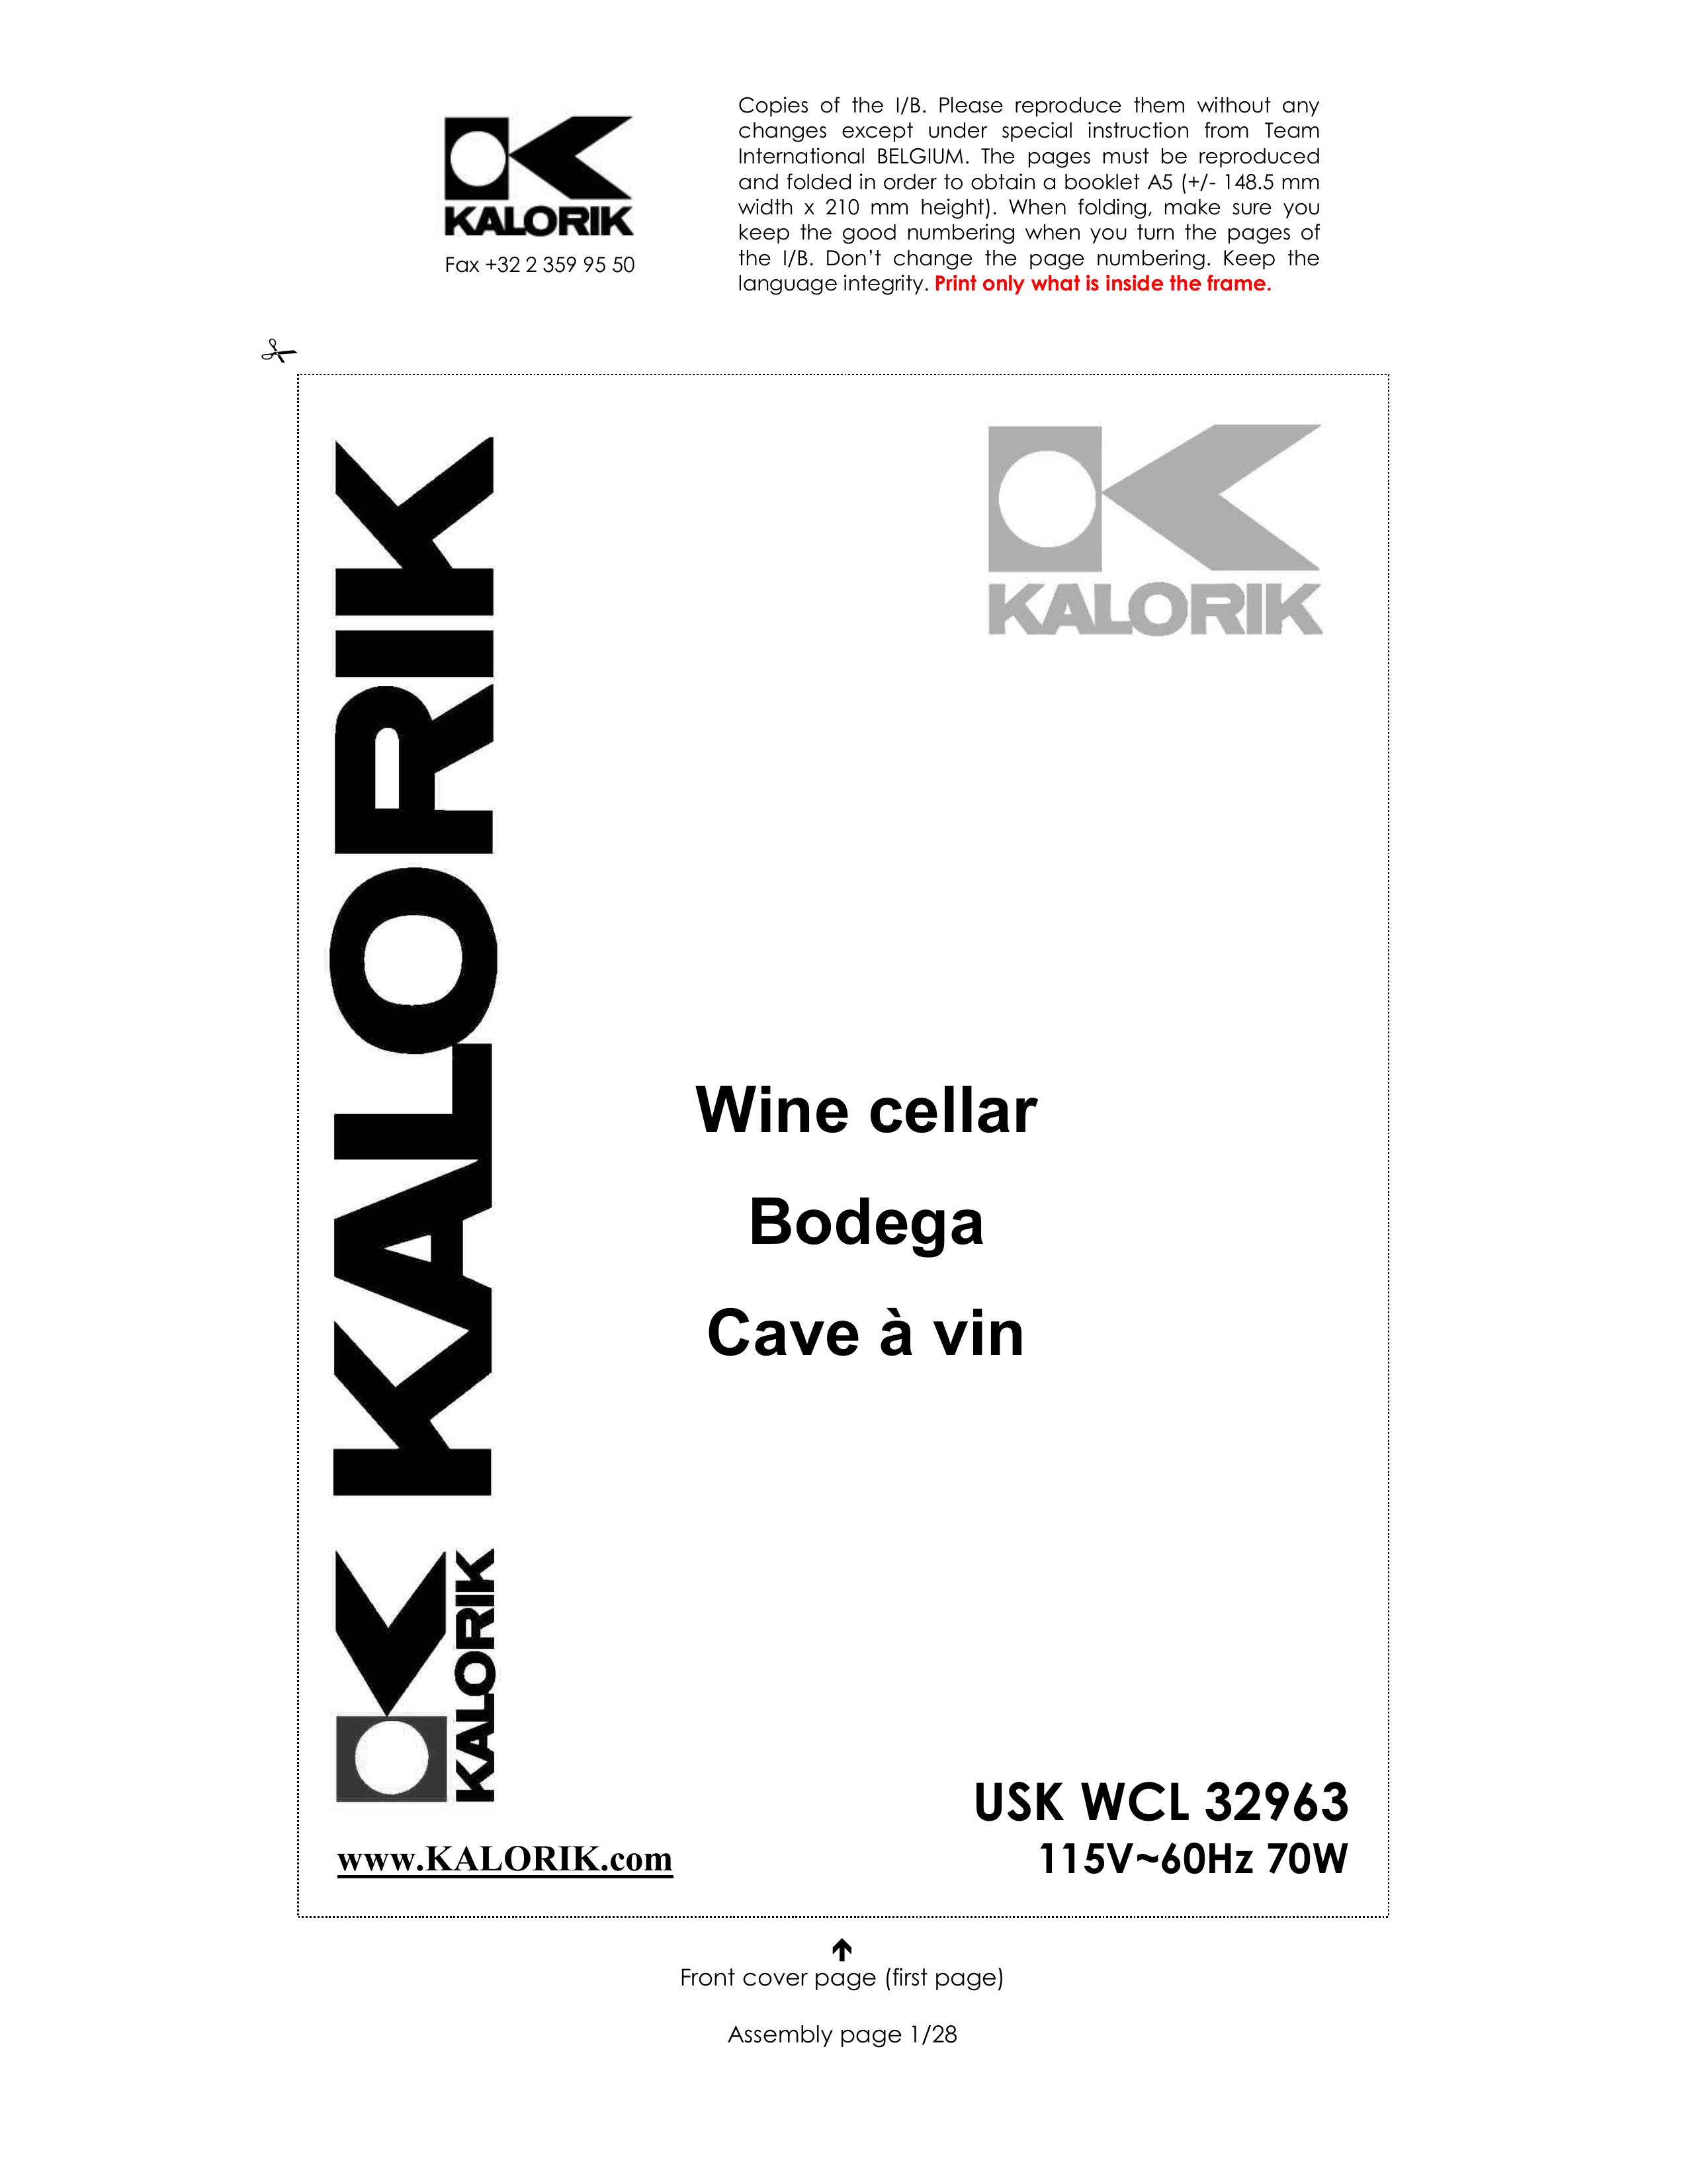 Kalorik USK WCL 32963 Refrigerator User Manual